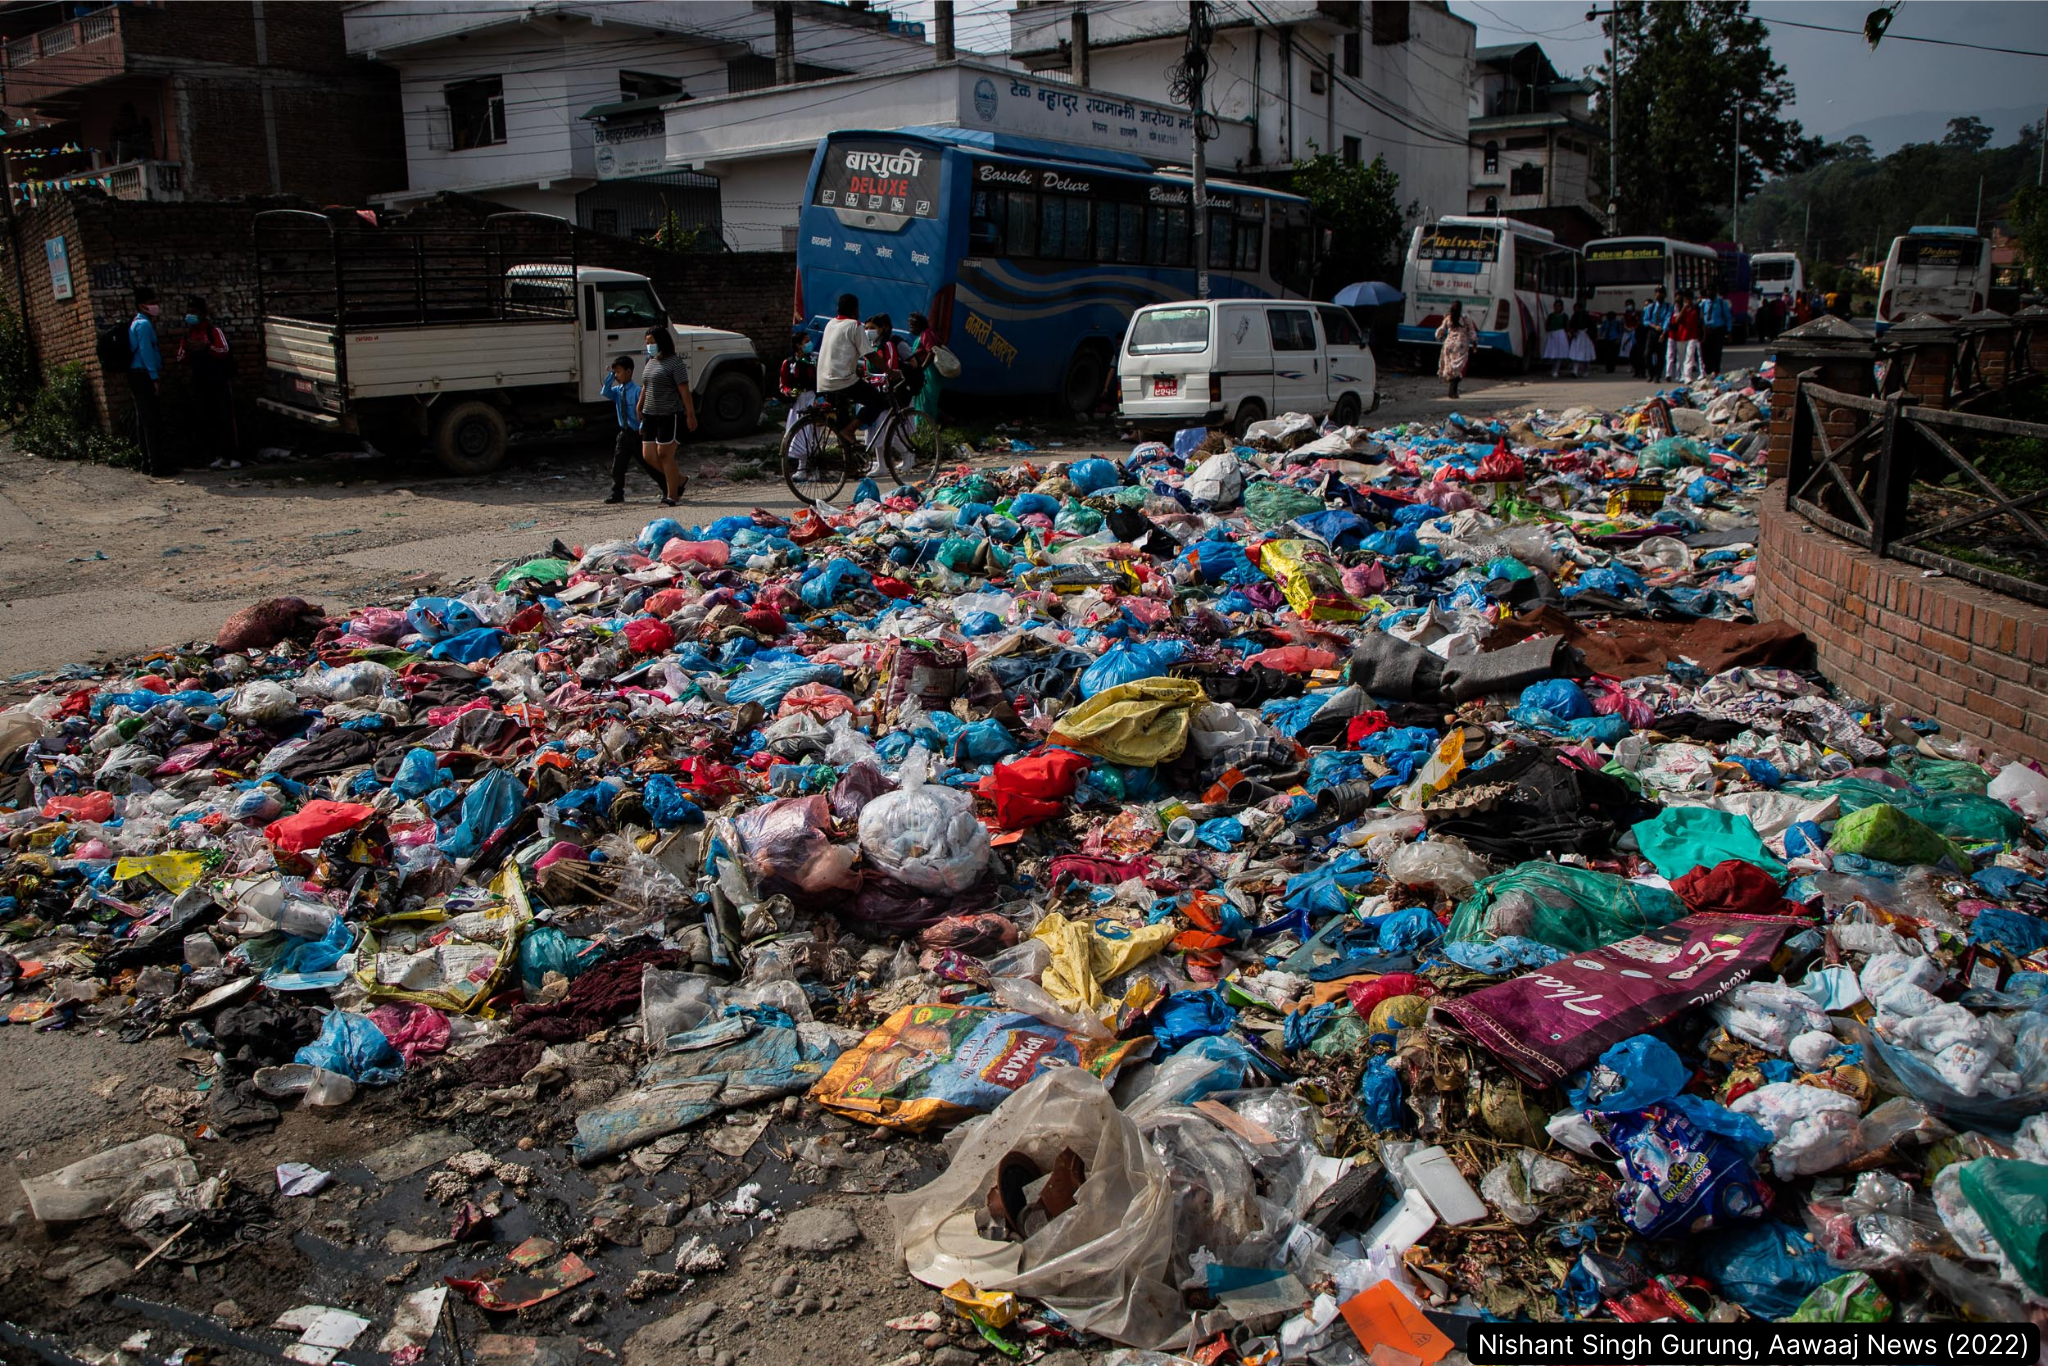 #waste management #nepal #solidwaste #landfill #take #tav #packaging #intention #hope #jute #resolve #reuse #return #repeat #recycle #reduce #circulareconomy #ultimategoal #concept #circular #journey #burnig #river